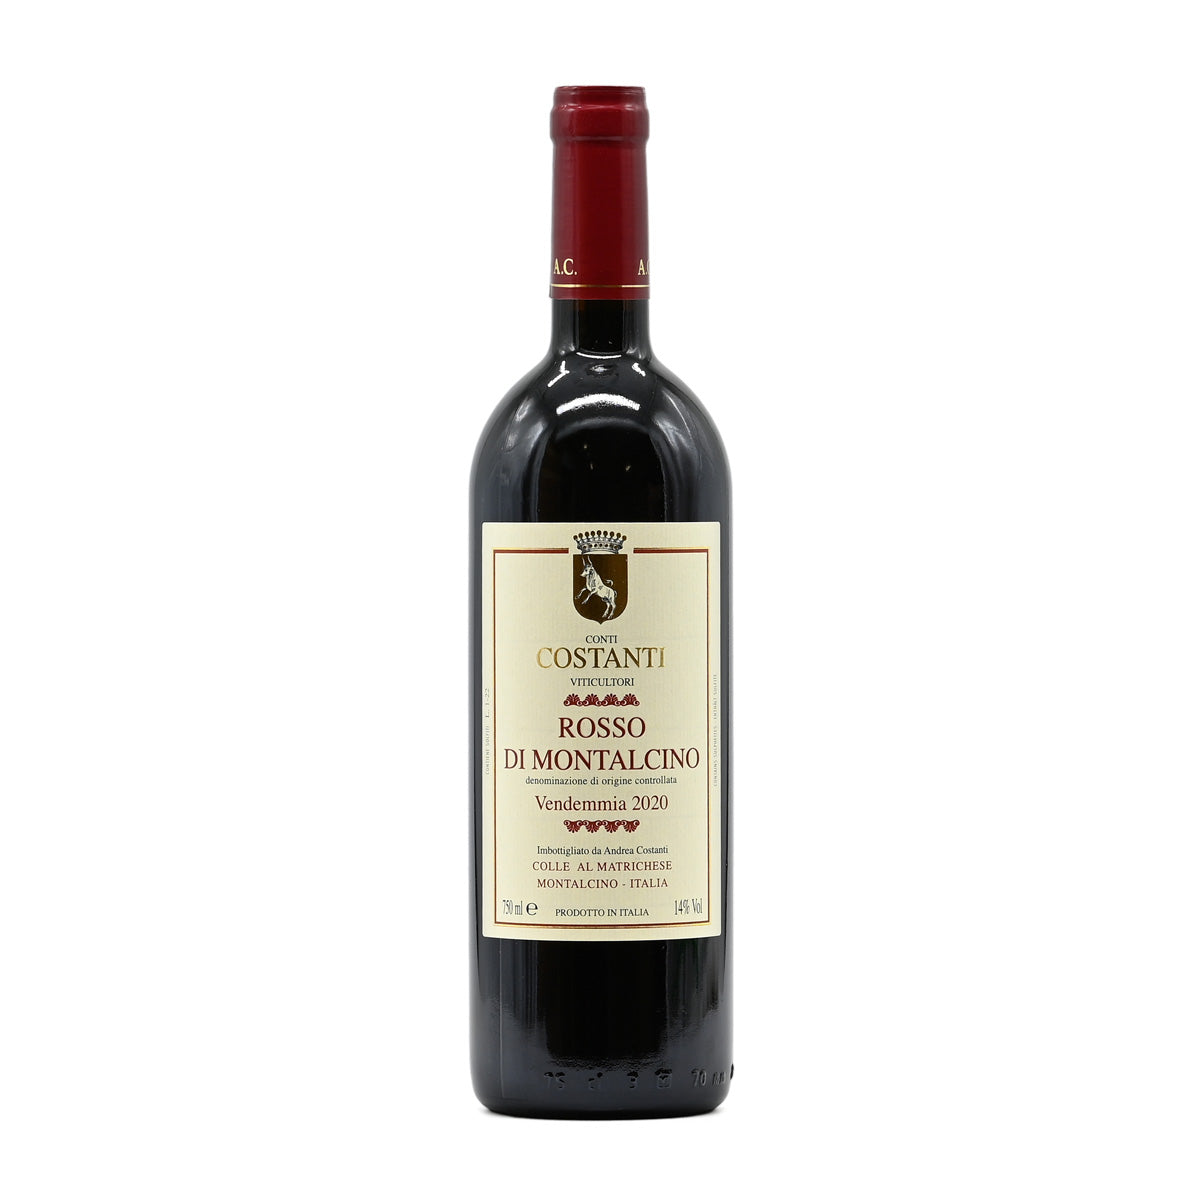 Conti Costanti Rosso di Montalcino 2020, 750ml Italian red wine, made from Sangiovese, from Rosso di Montalcino DOC, Tuscany, Italy – GDV Fine Wines, Hong Kong